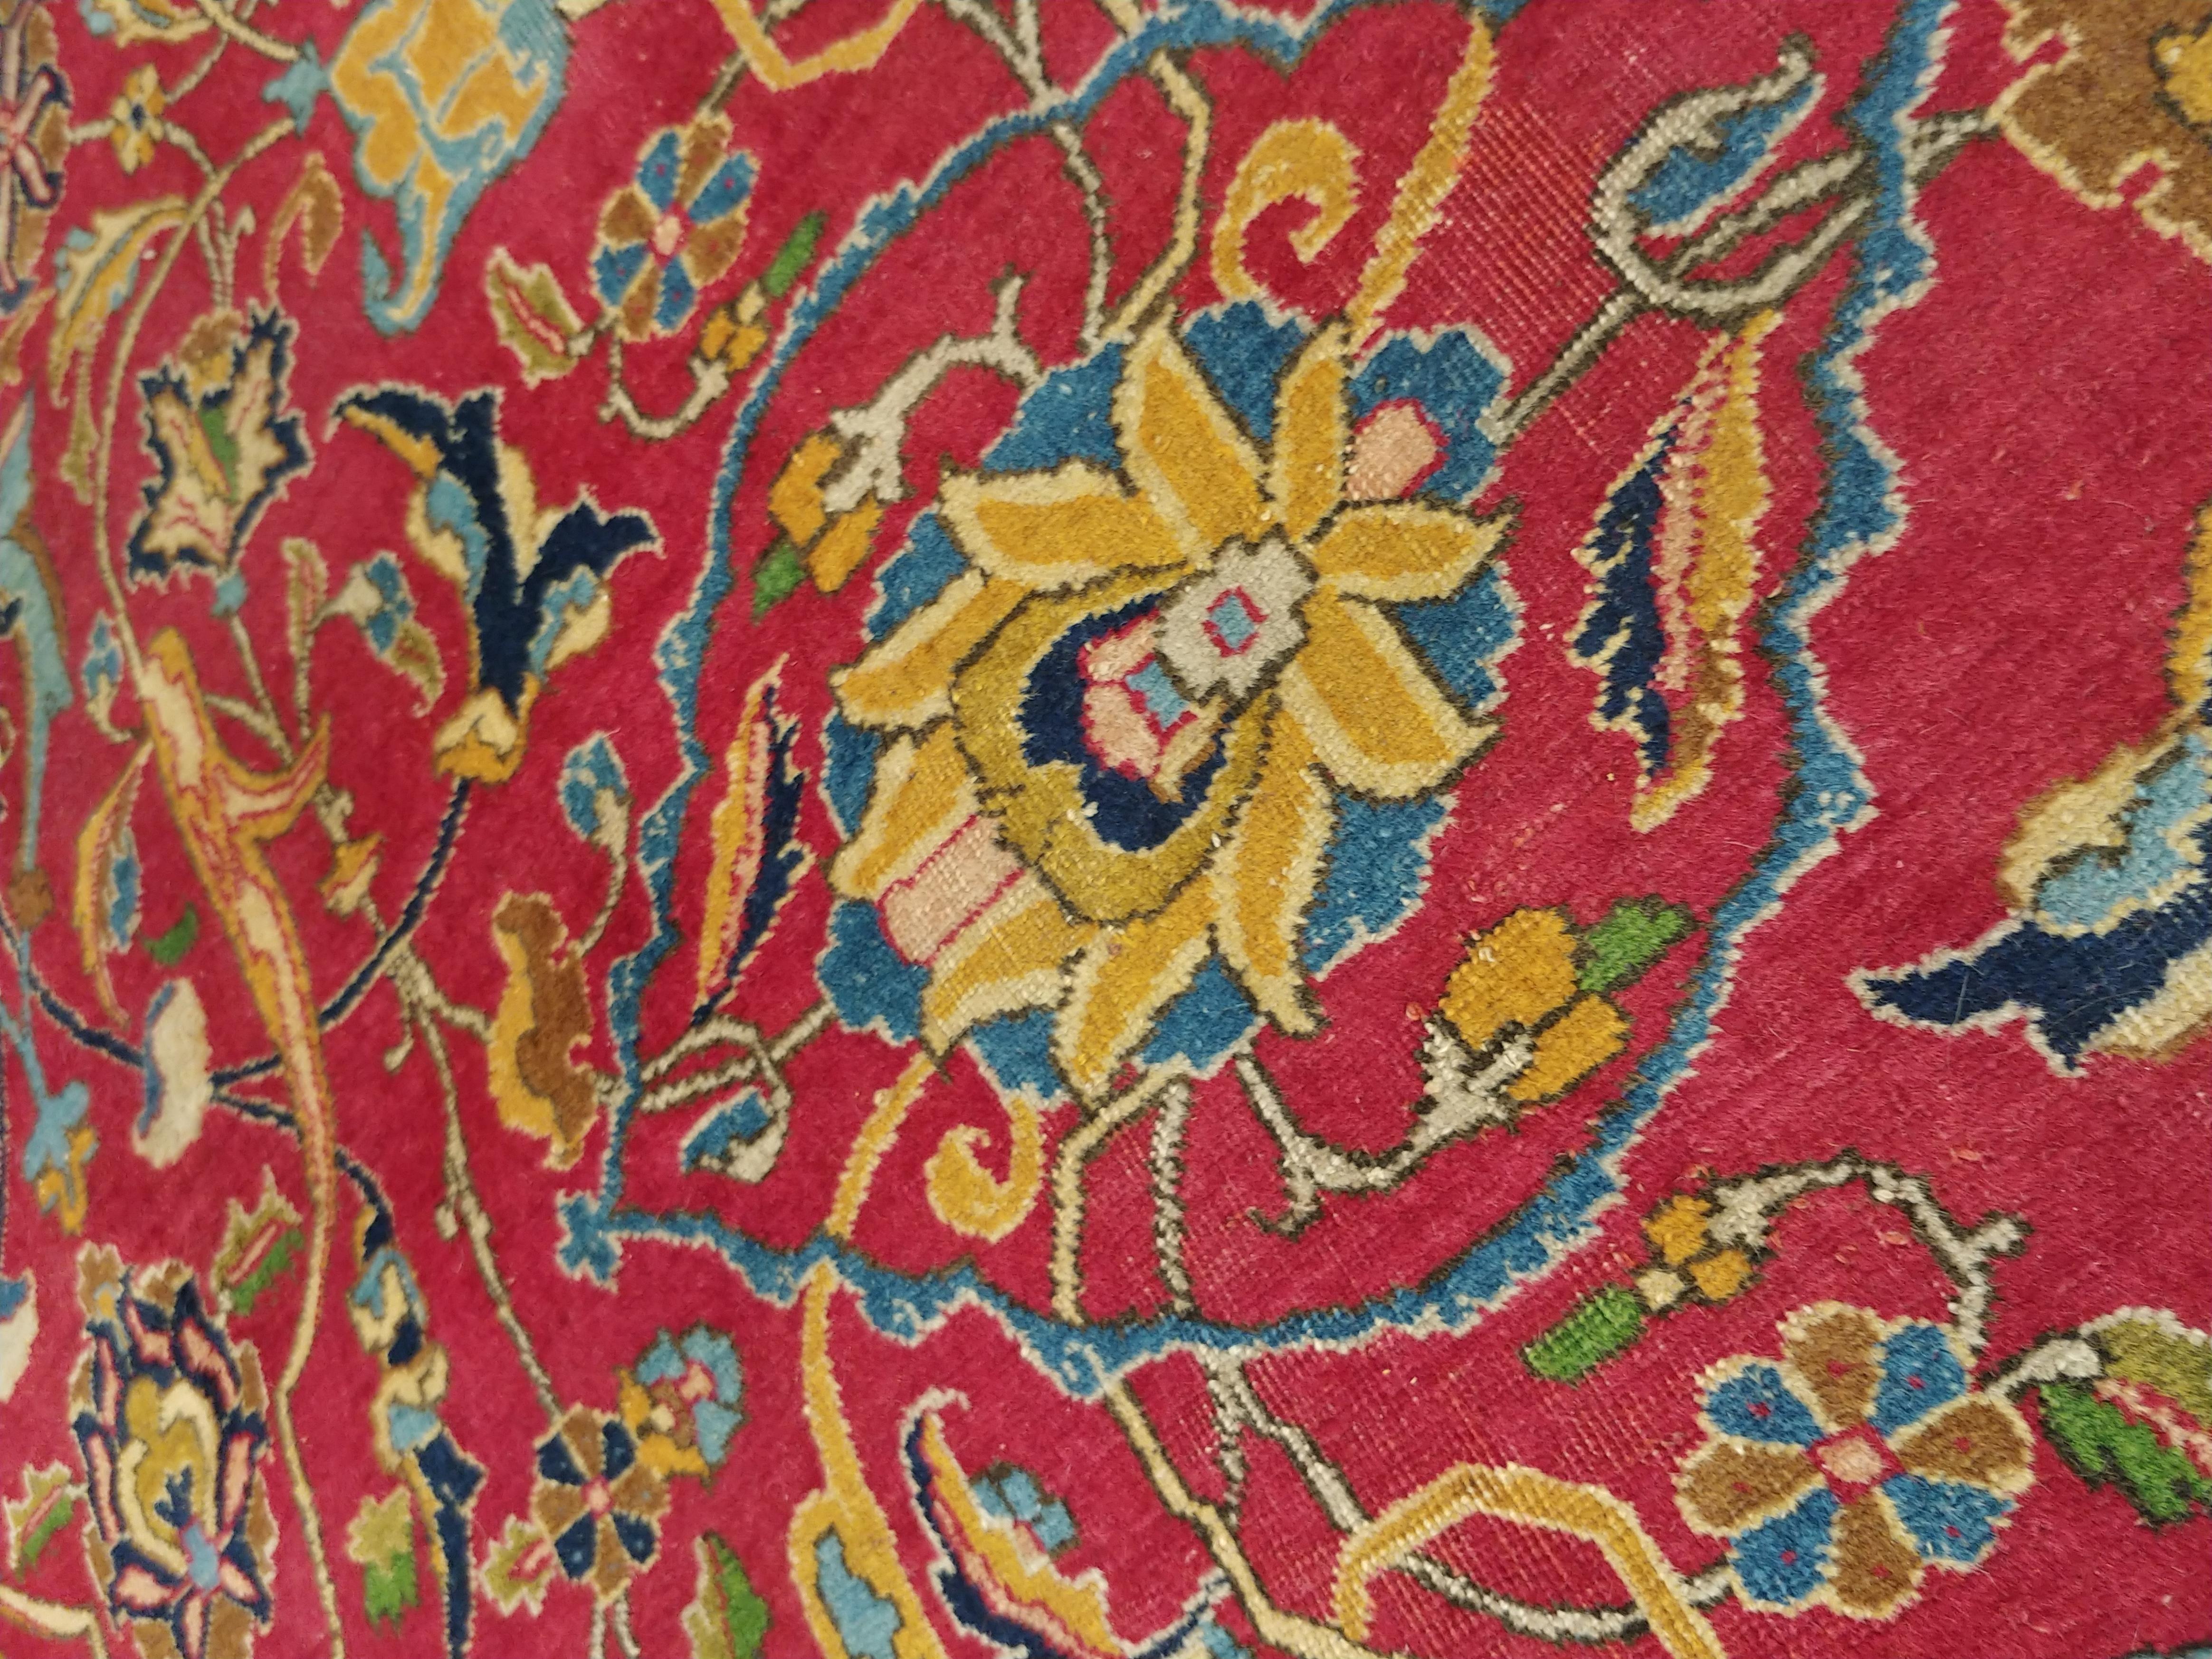 Antique Tabriz Persian Carpet, Handmade Oriental Rug, Red, Caramel, Light Blue 3